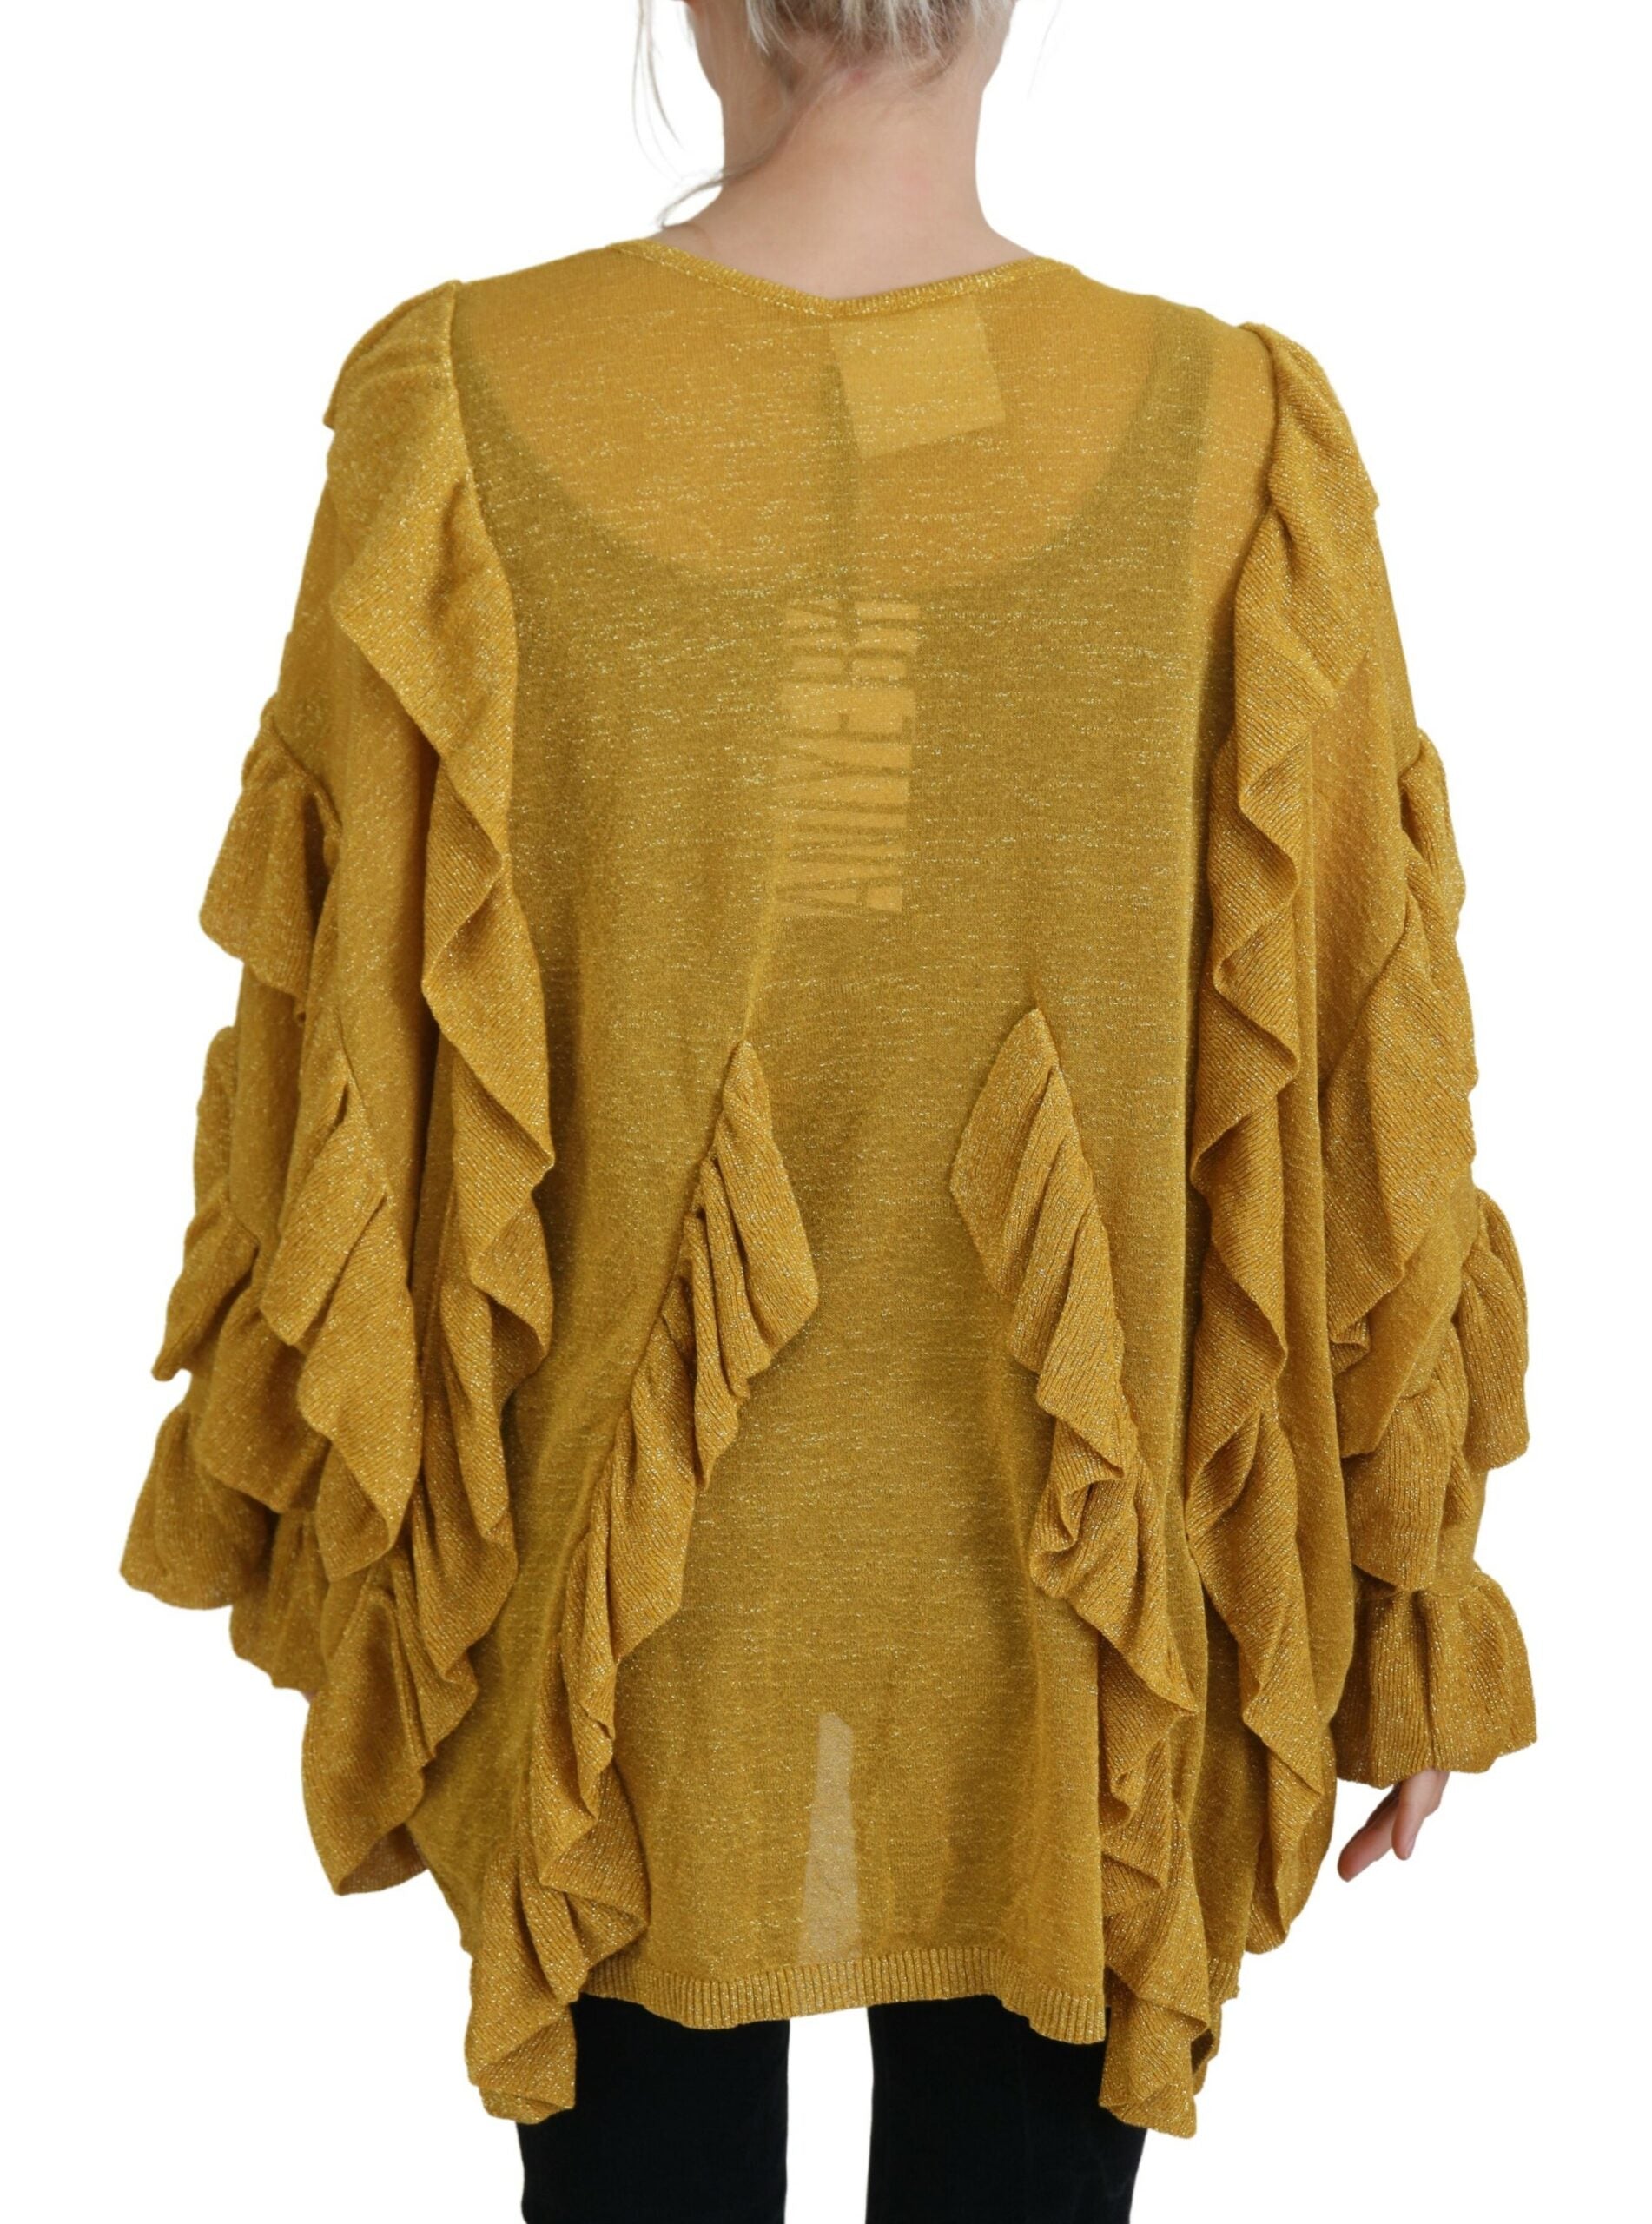 Aniye By Elegant Gold Cardigan Sweater